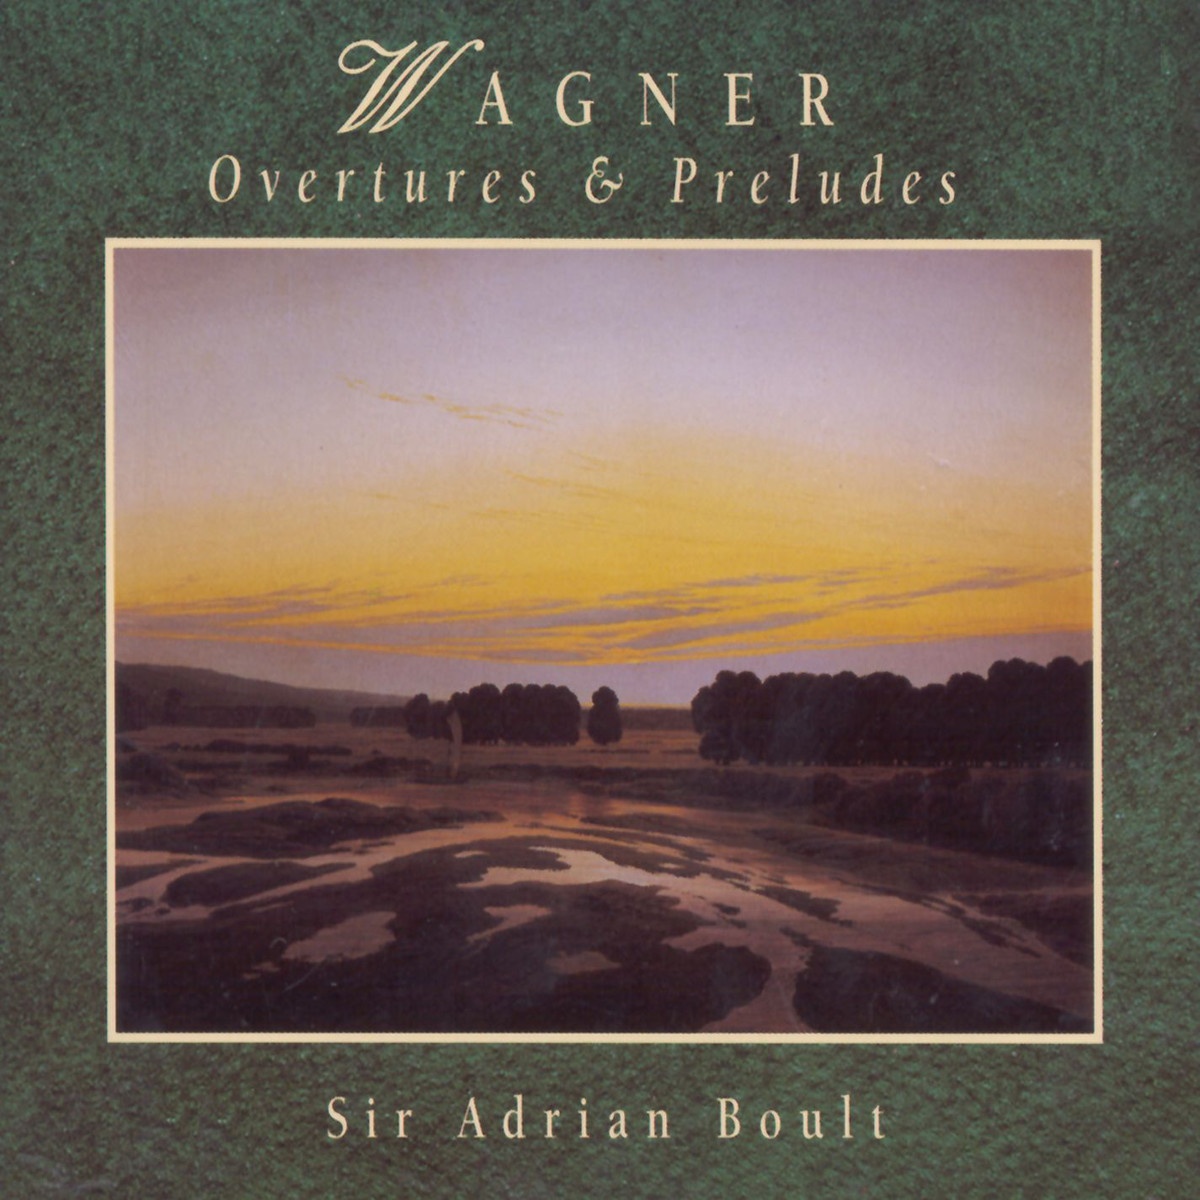 Siegfried (1989 Digital Remaster): Forest murmurs (concert version)